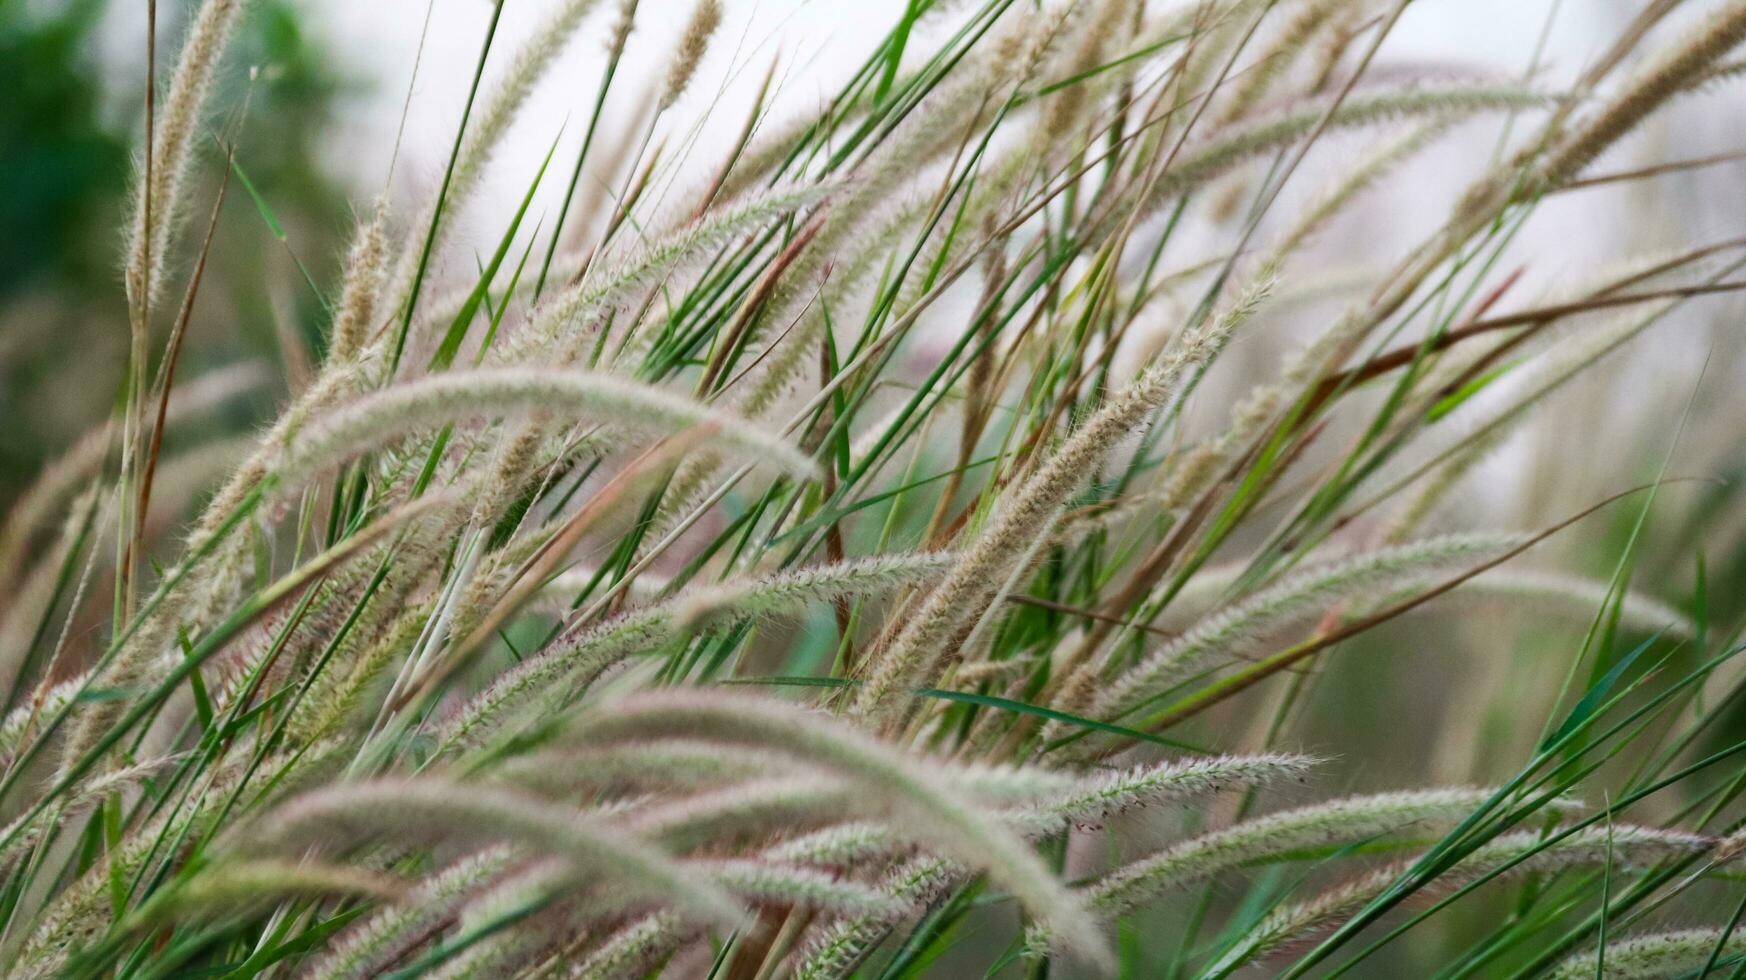 Feather pennisetum grass on blur background photo